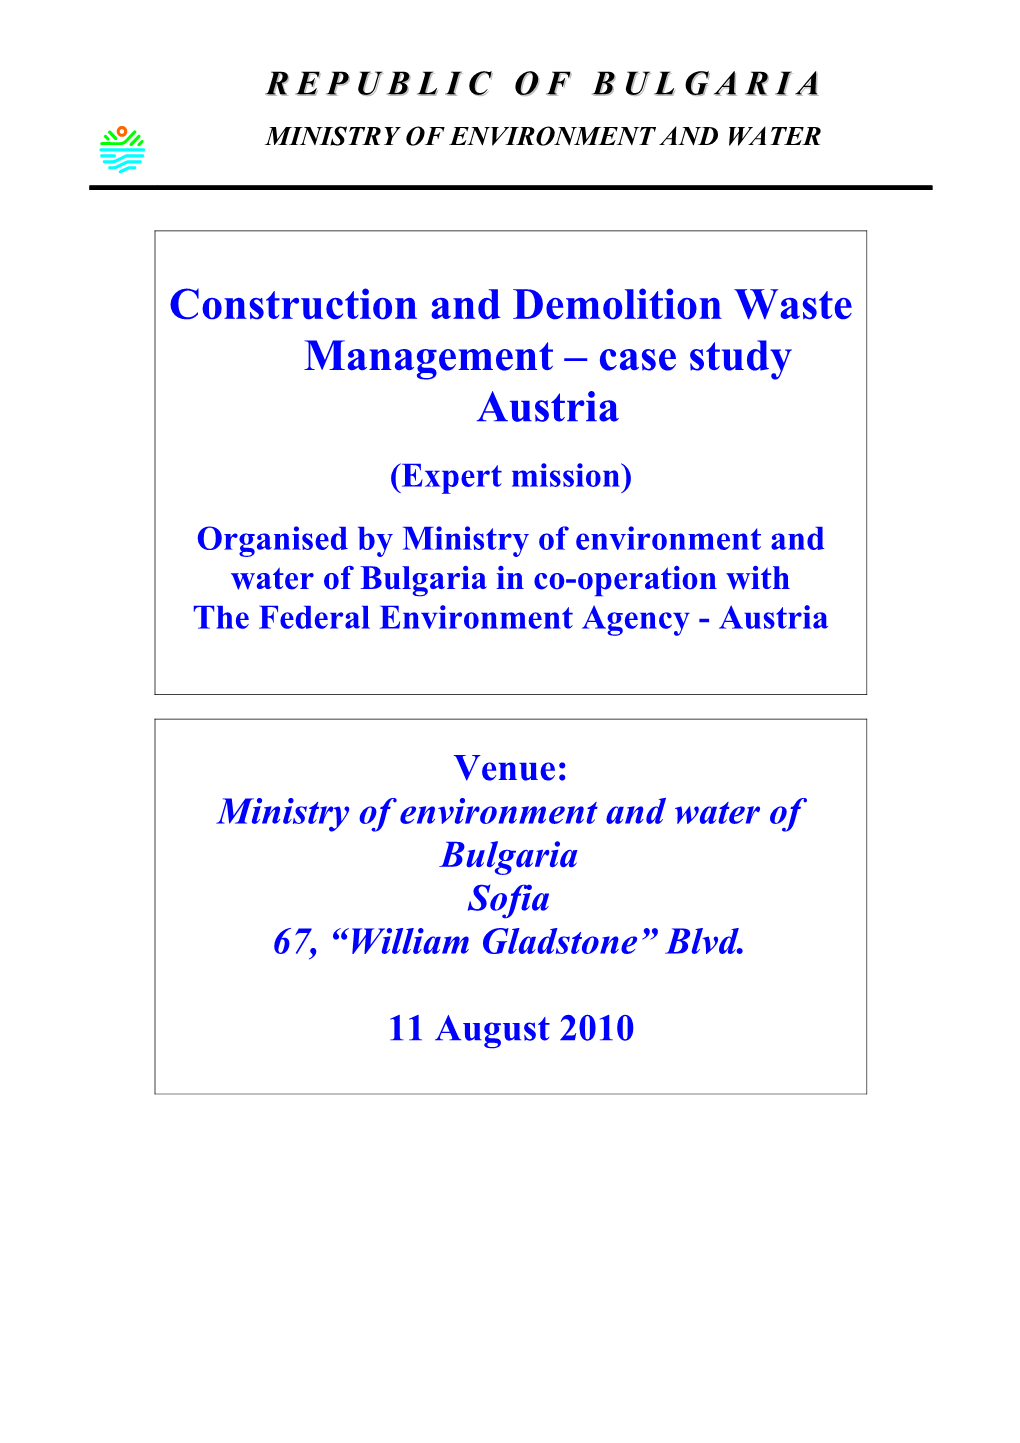 Construction and Demolition Waste Management Case Study Austria